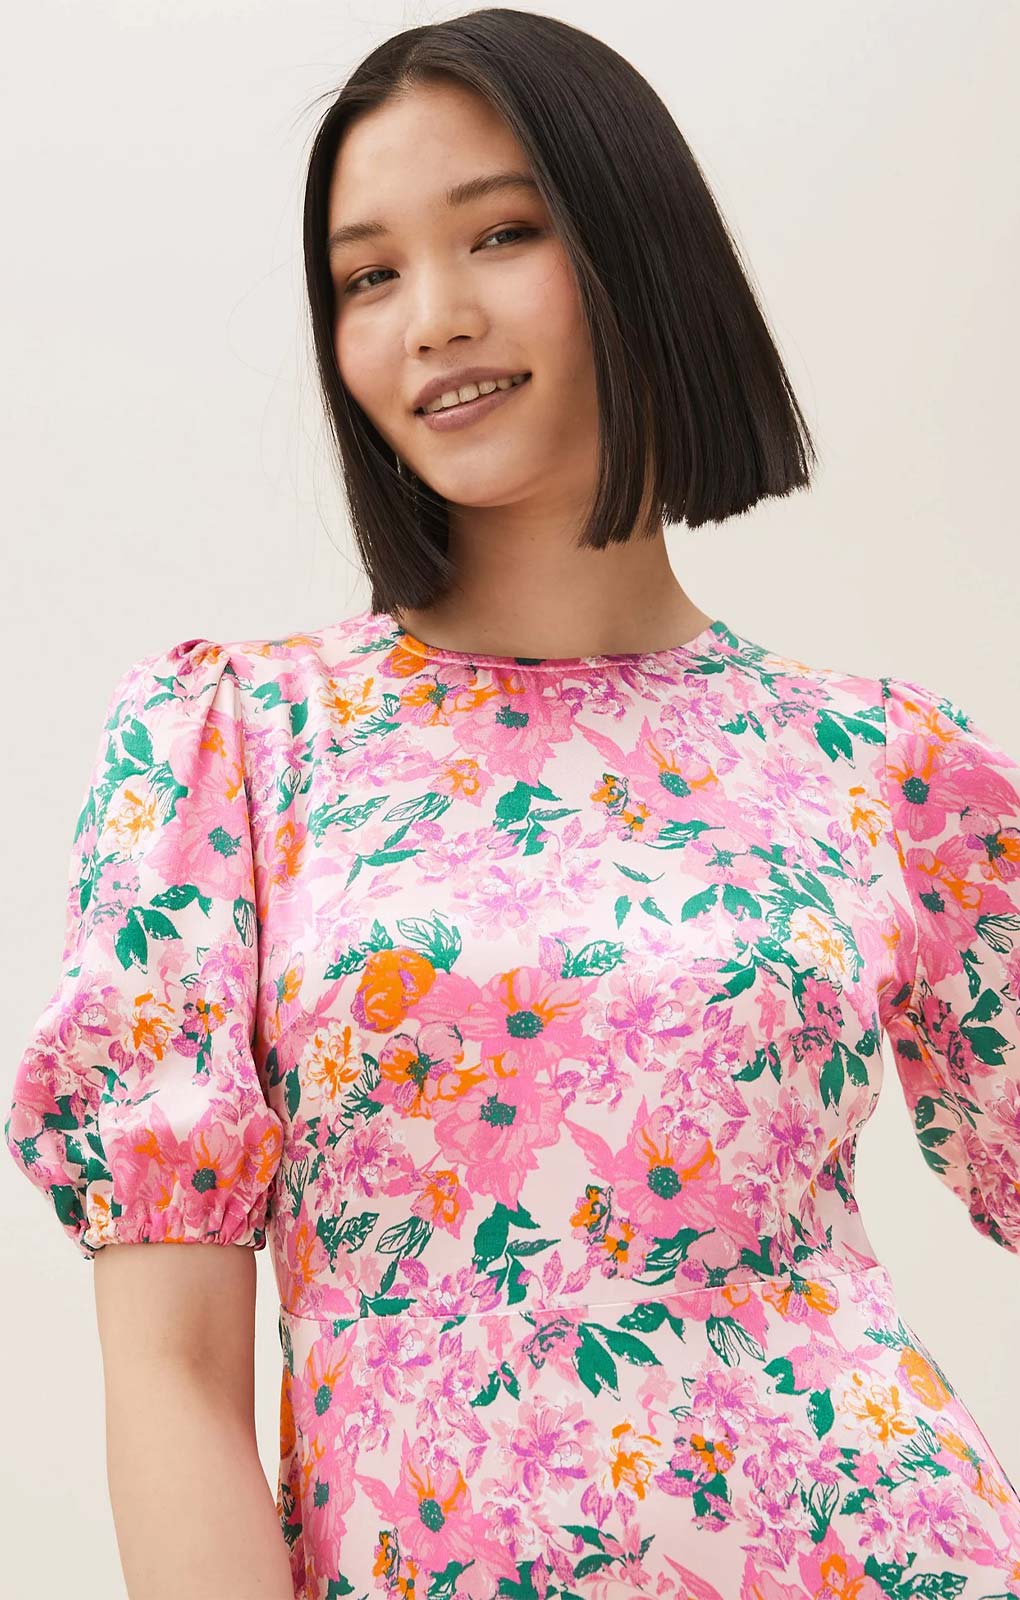 M&S Floral Satin Midaxi Tea Dress product image